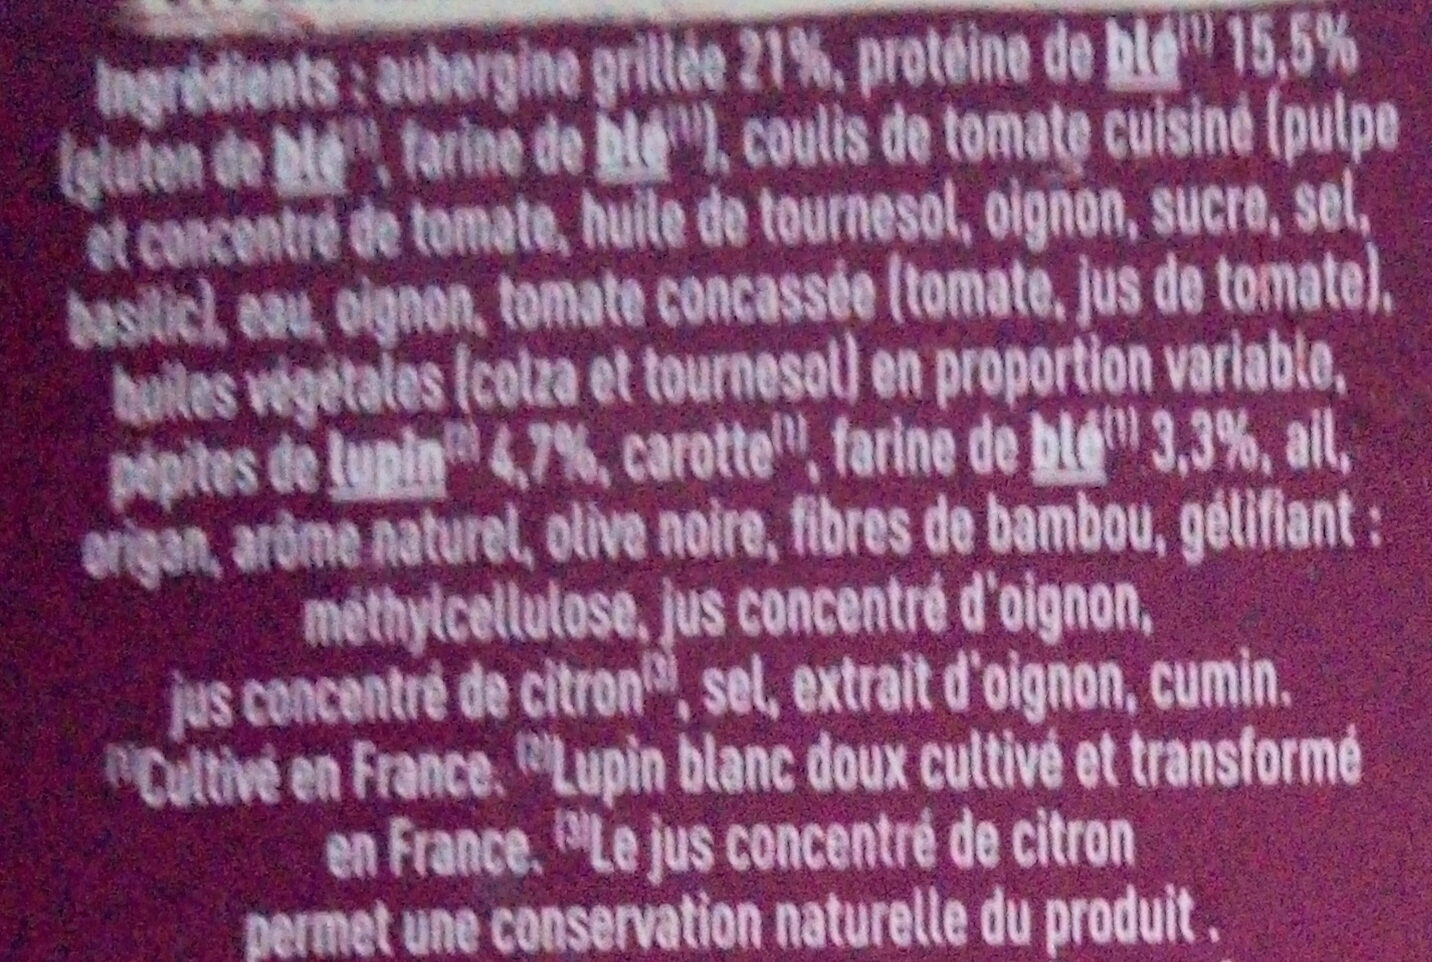 Galette blé & lupin aubergine cuisinée - Ingredients - fr